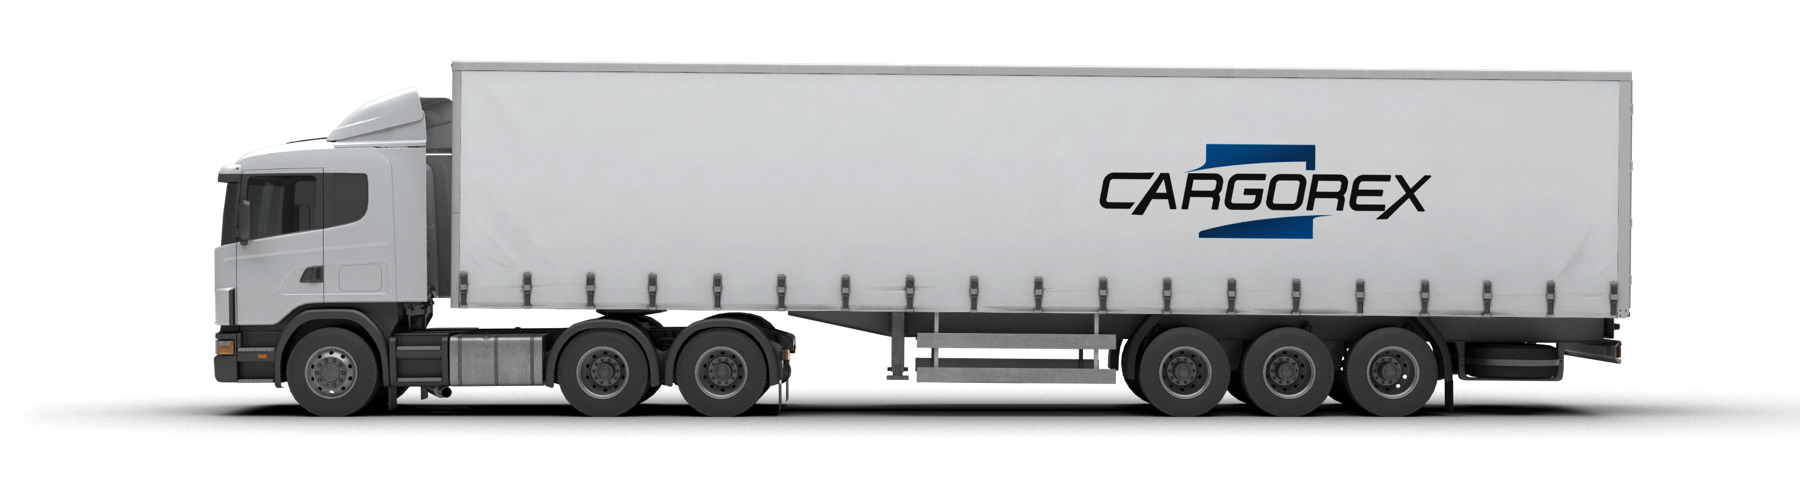 Cargorexpsd online - Lancashire Freight Services